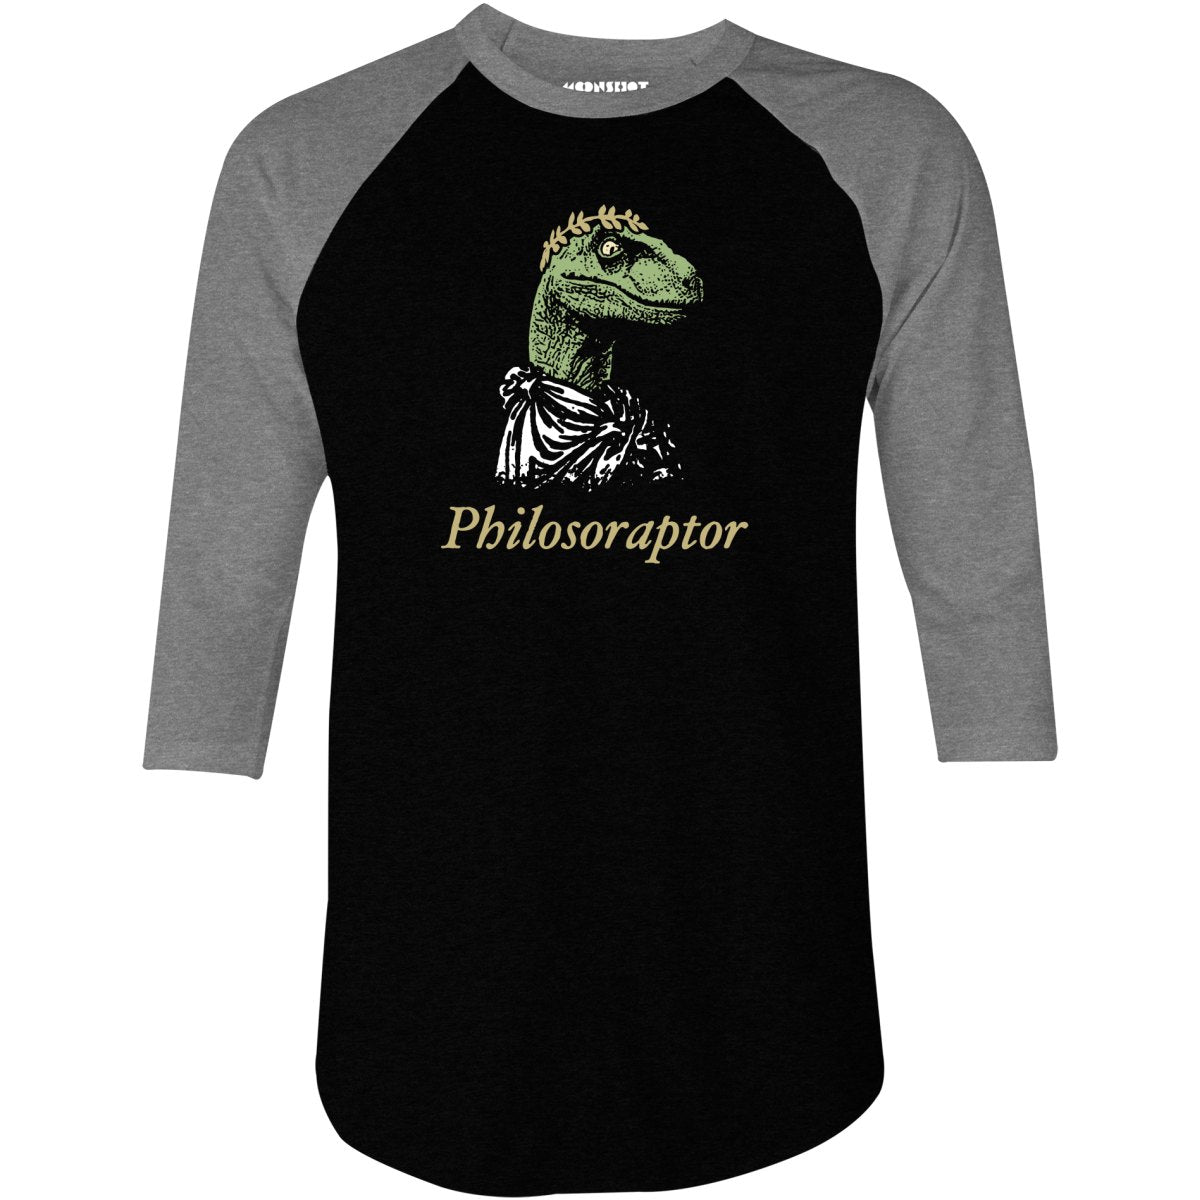 Philosoraptor - 3/4 Sleeve Raglan T-Shirt